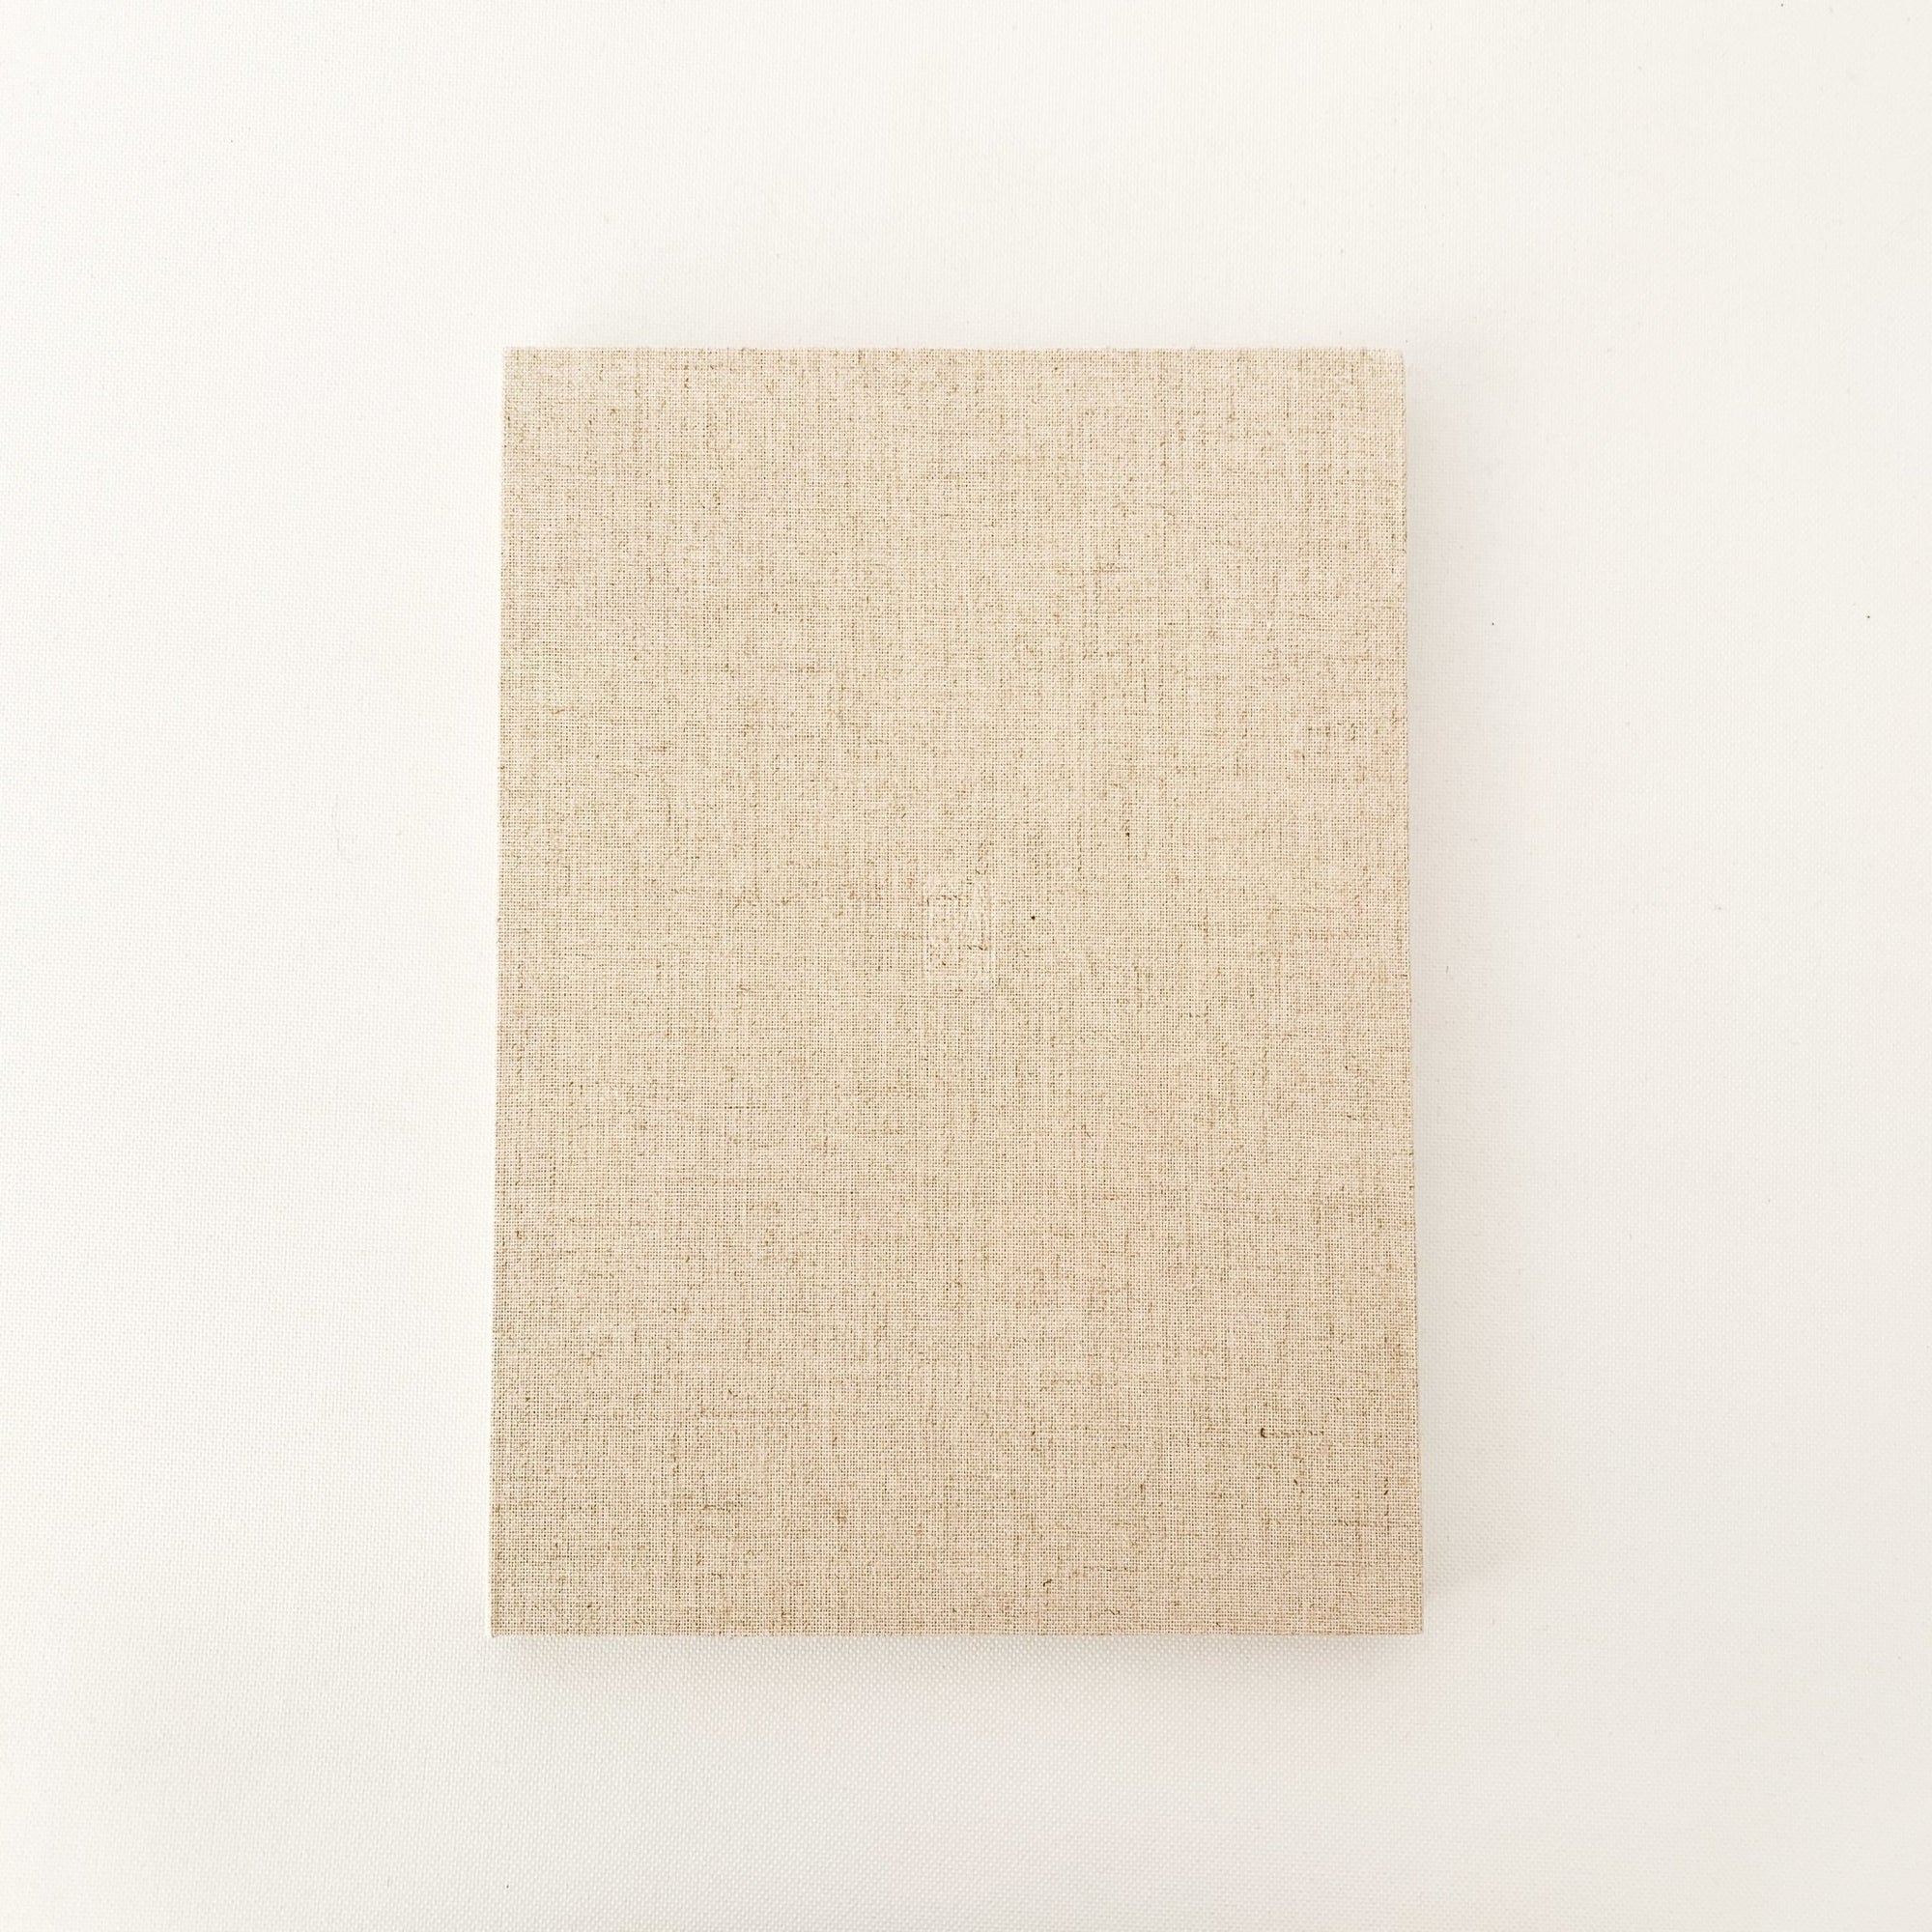 Notebook B5 in Ecru off white by MISUZUDO - tortoise general store